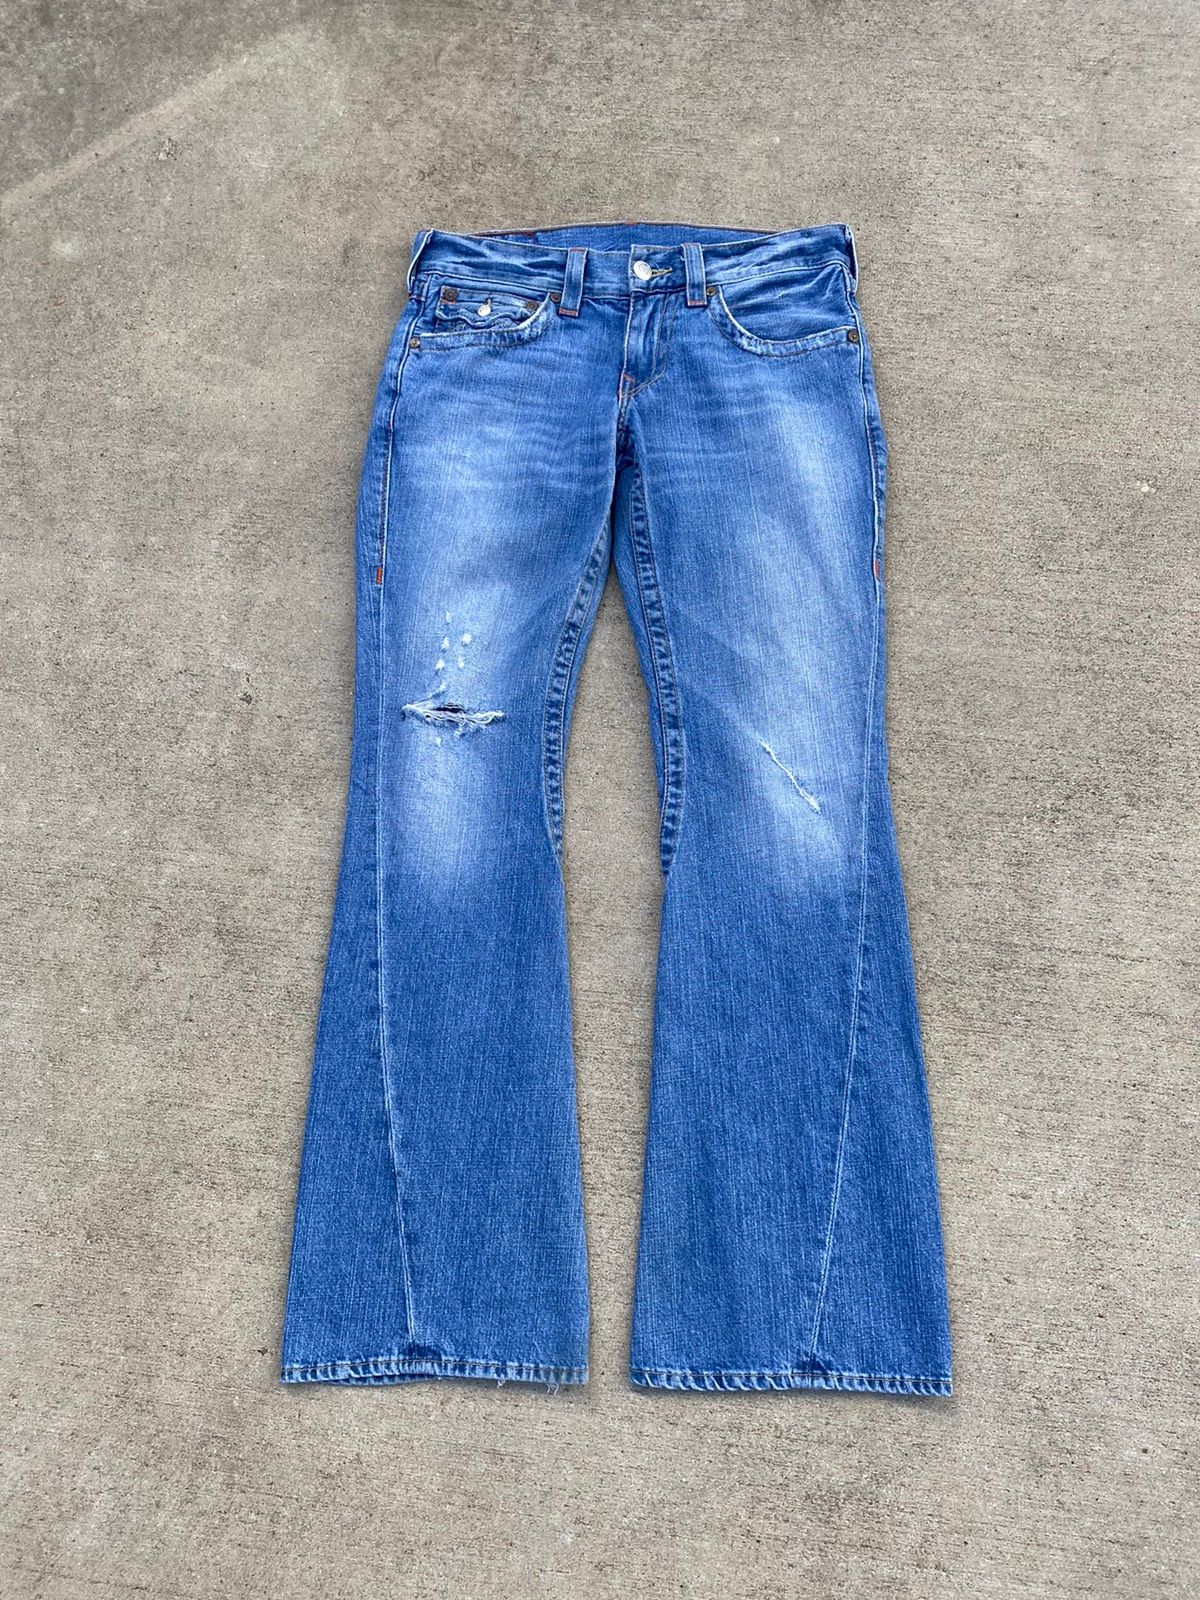 True Religion Vintage True Religion Joey Flared Jeans Rainbow | Grailed